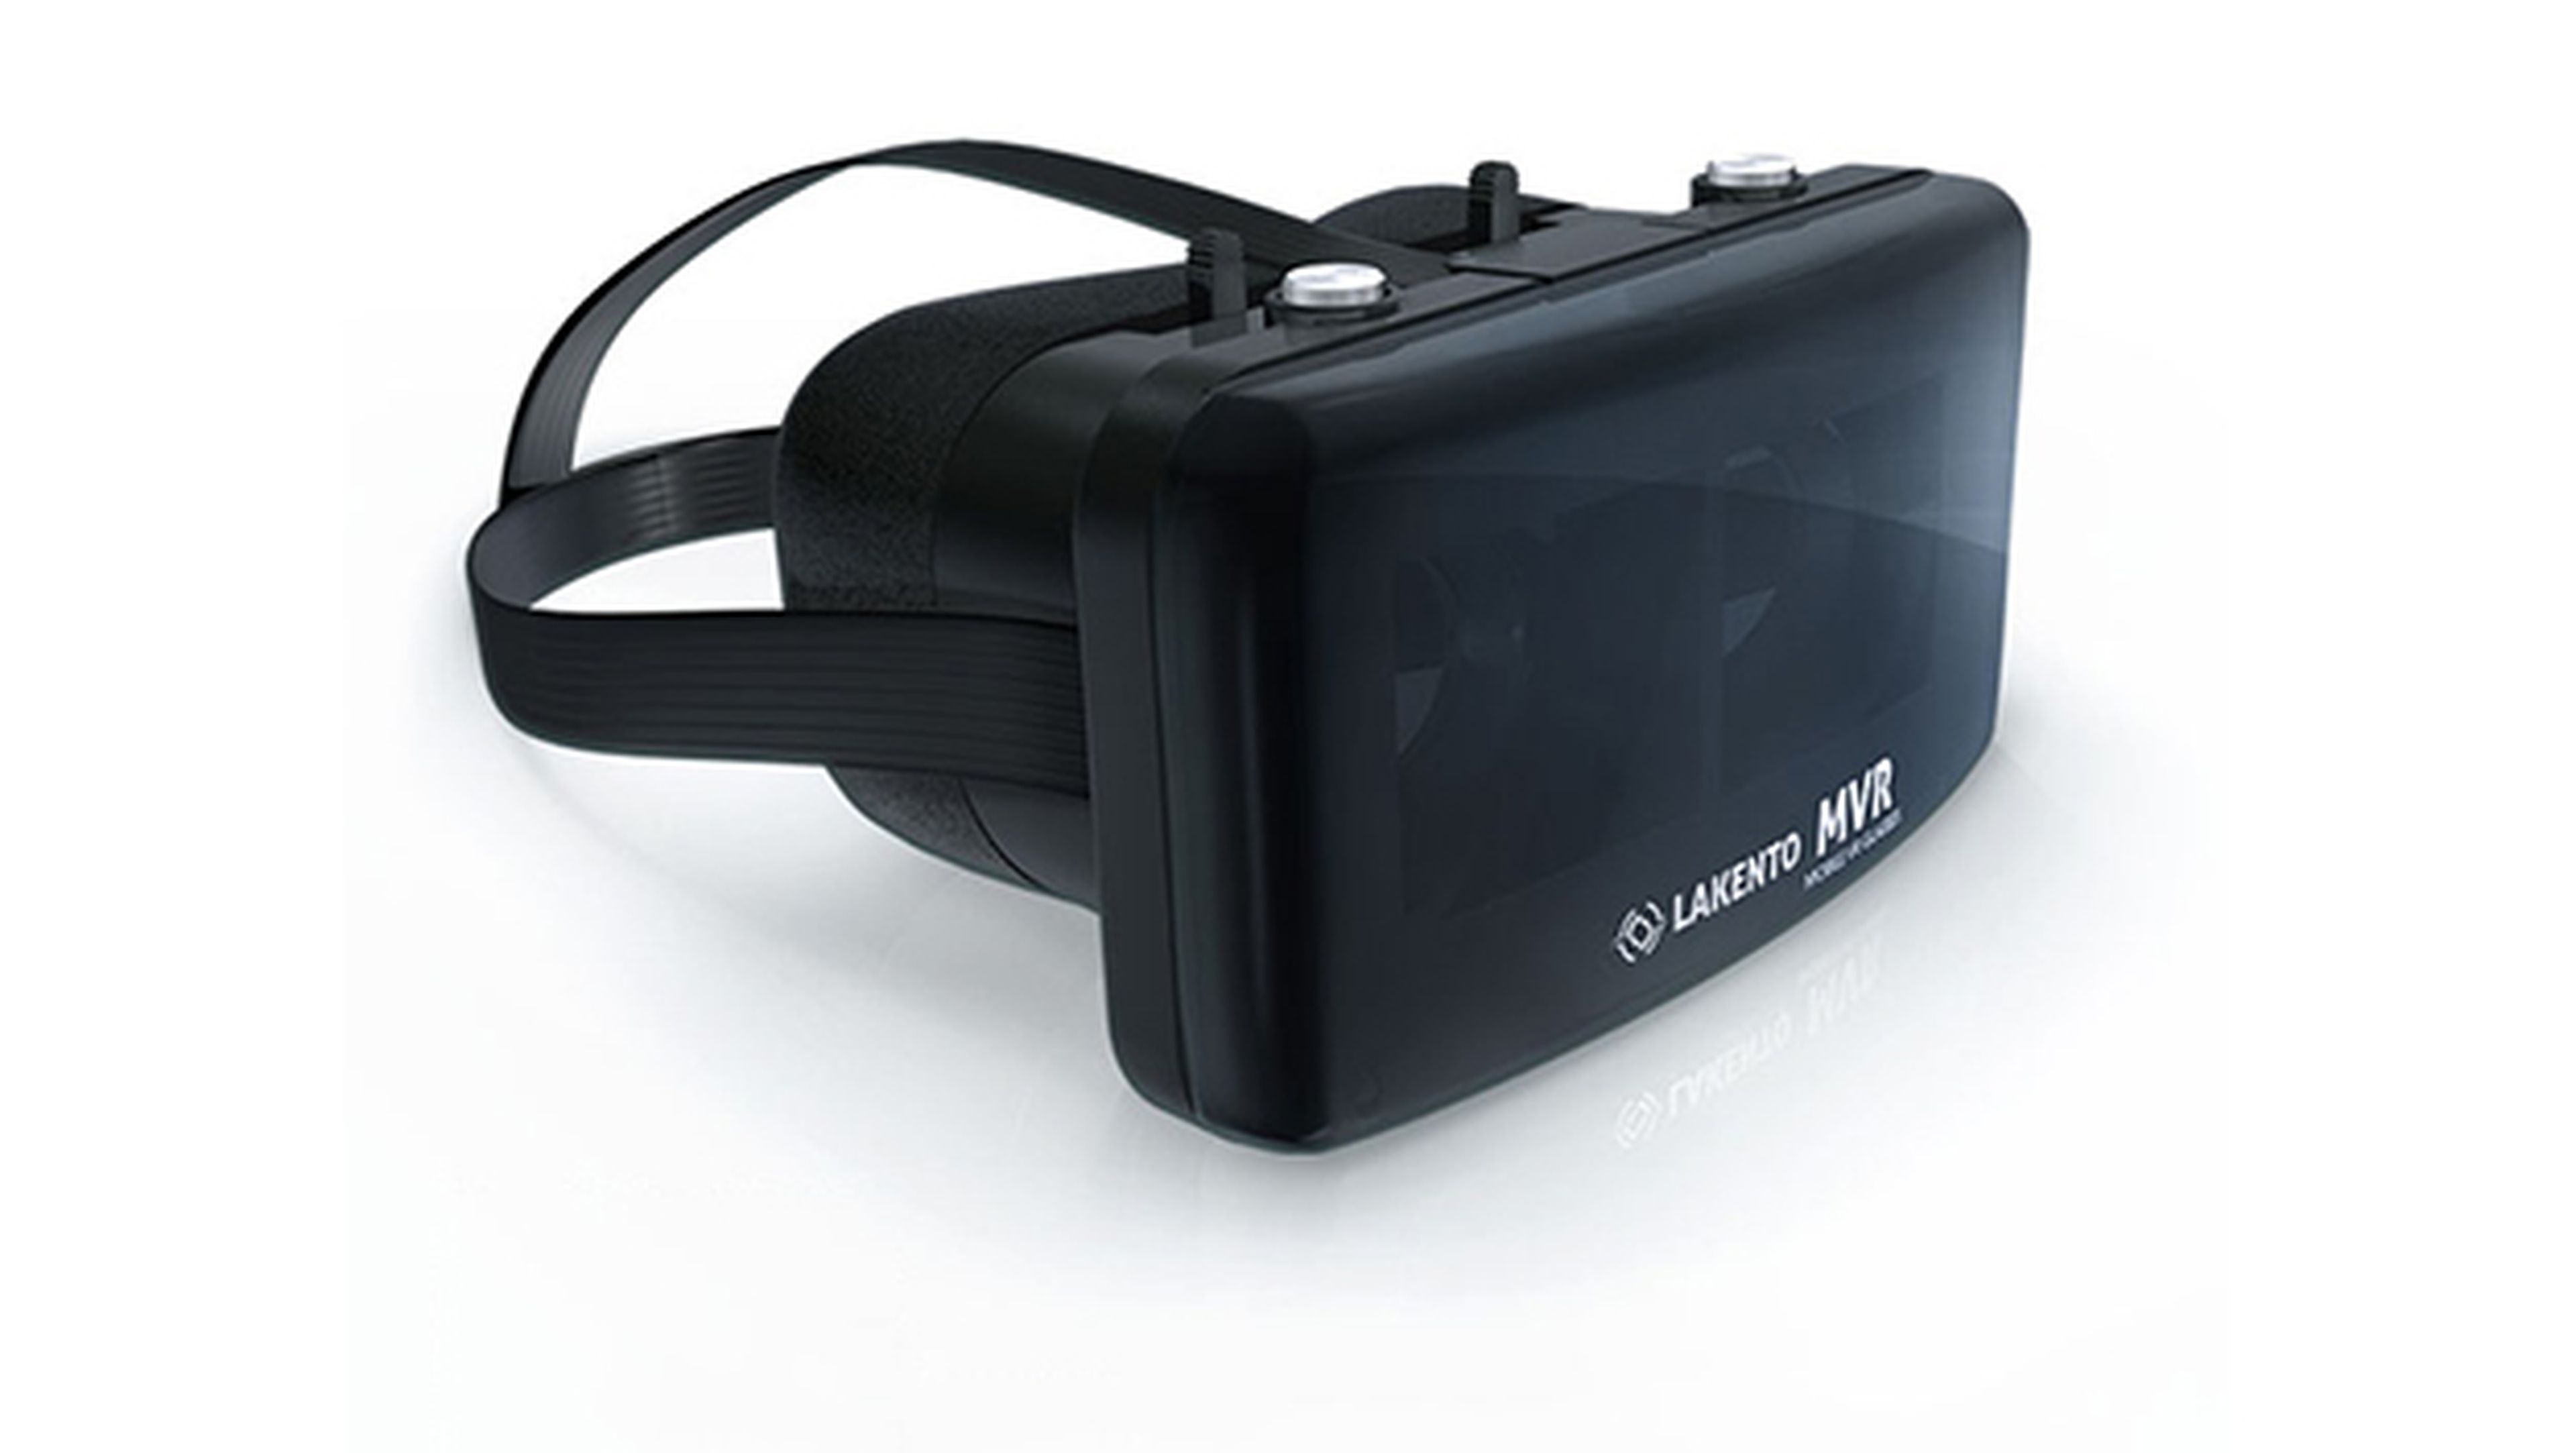 Gafas de realidad virtual Lakento MVR